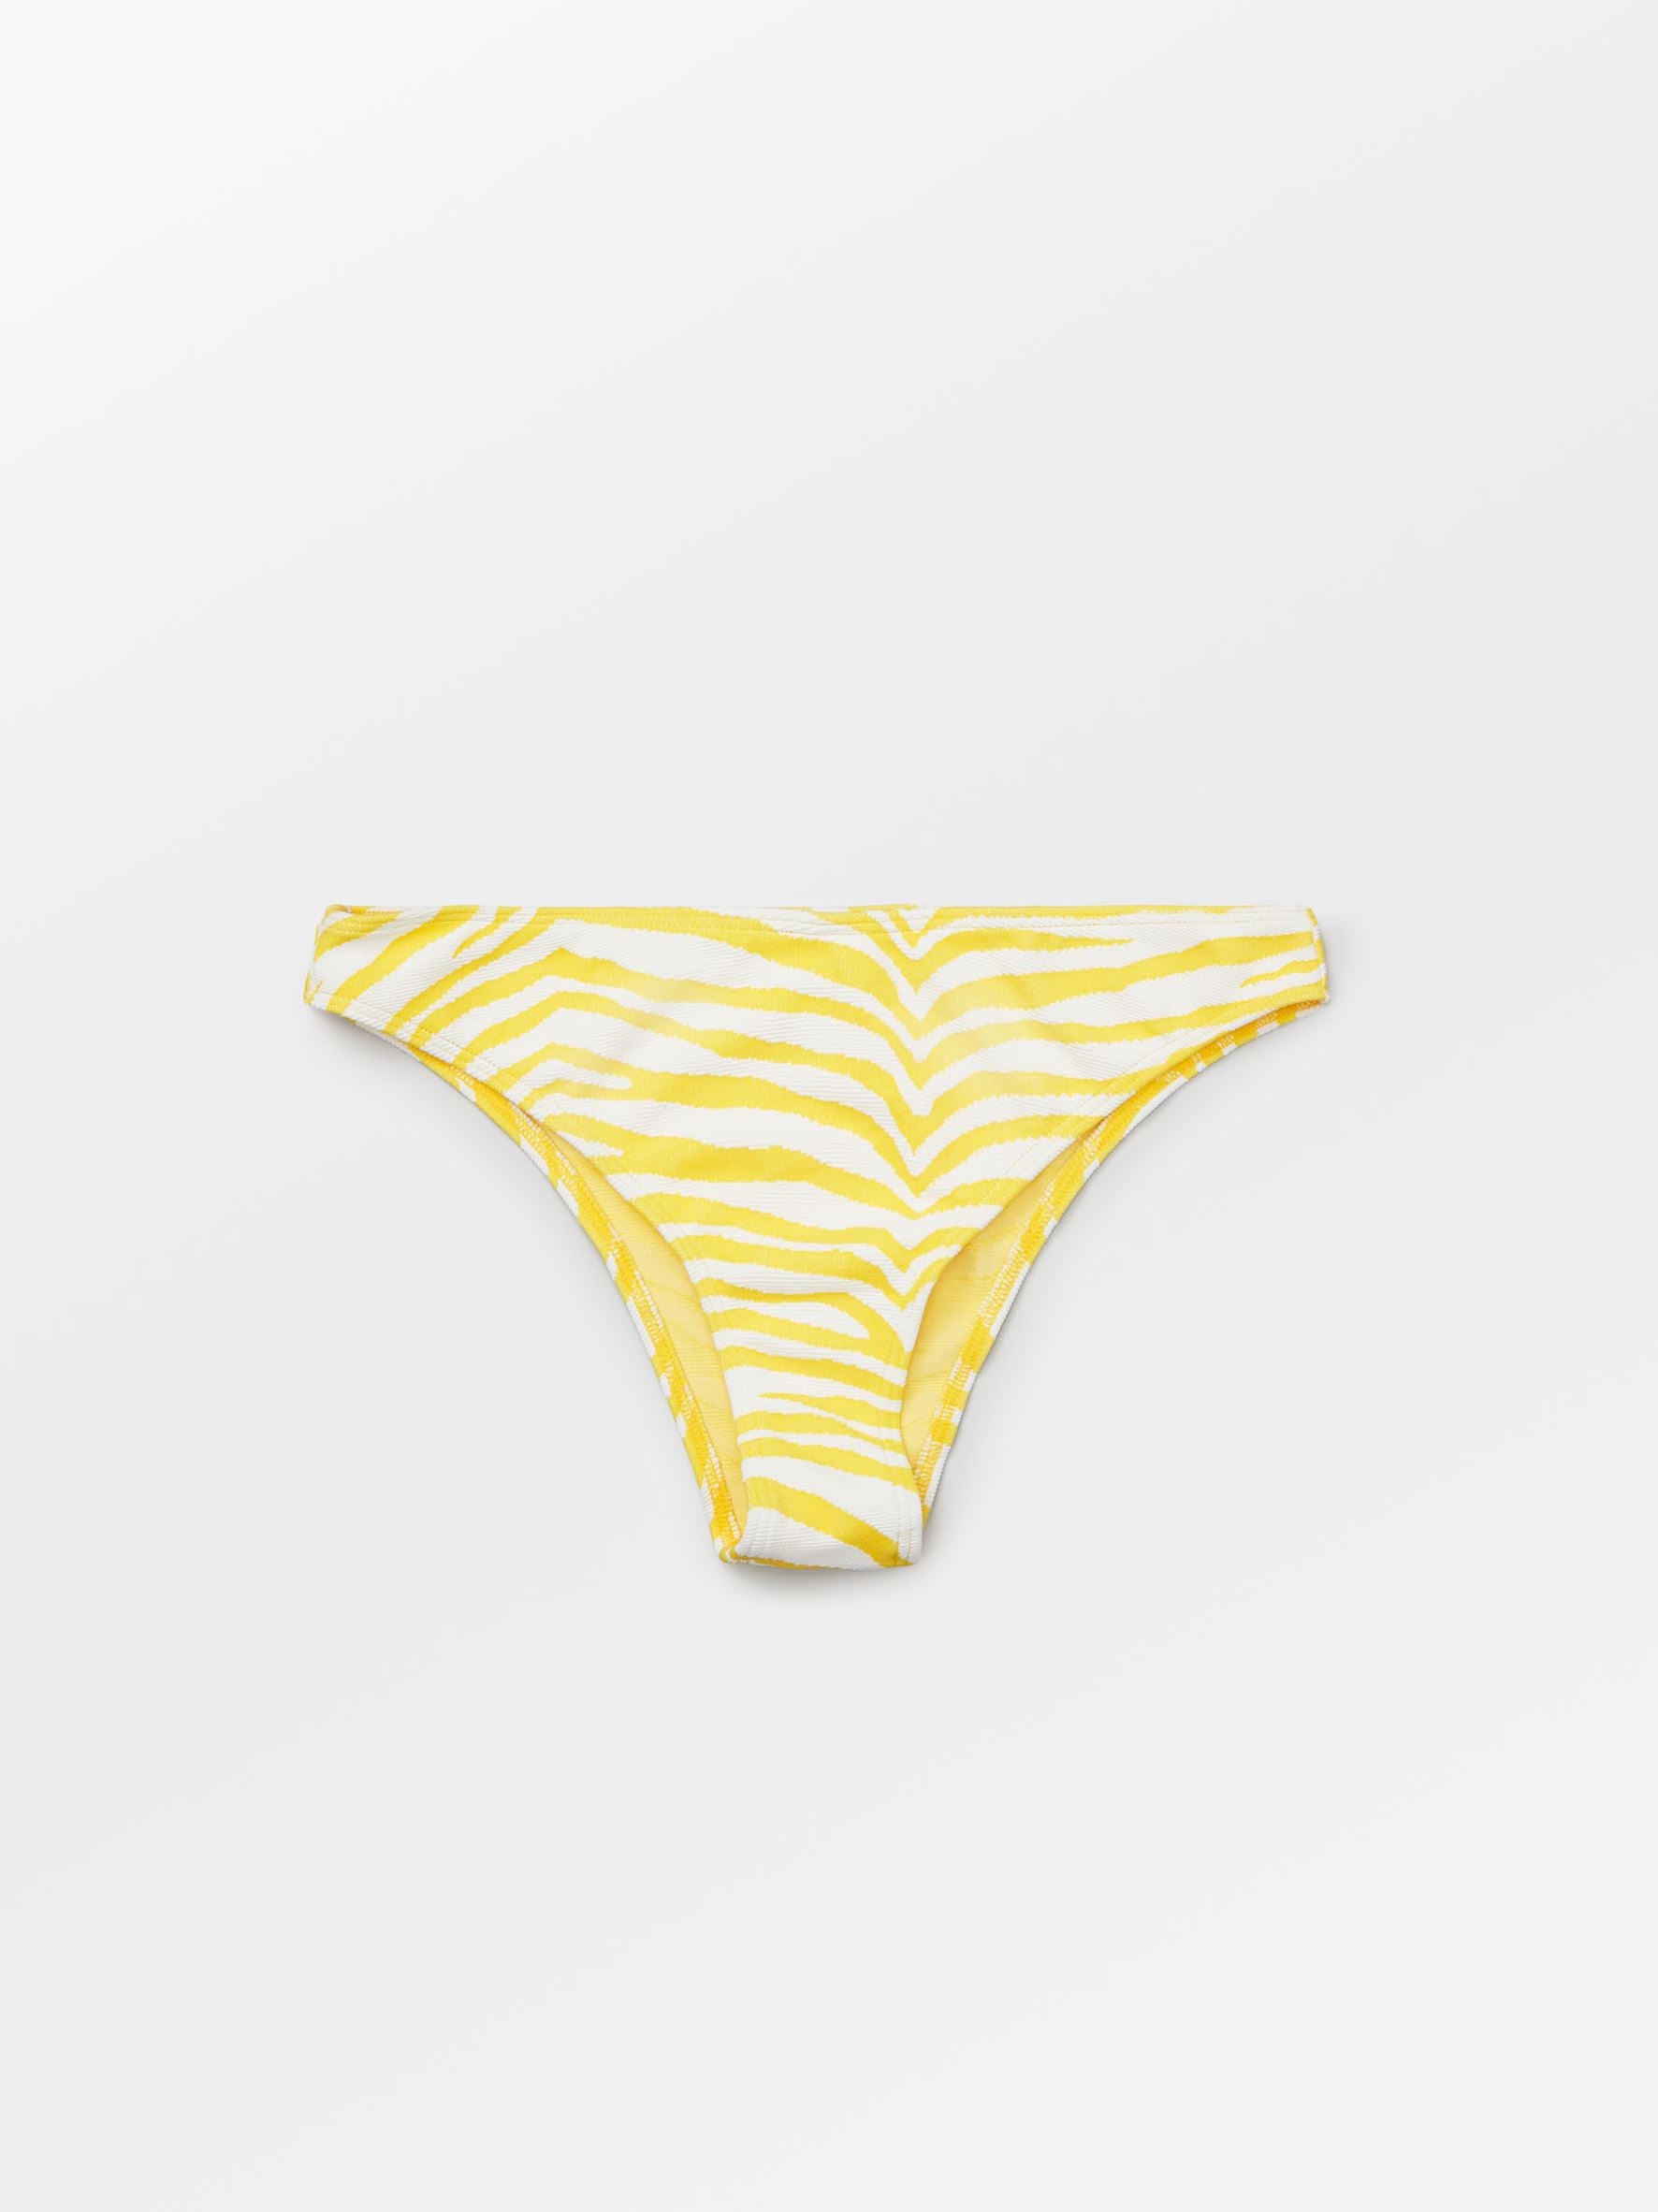 Becksöndergaard, Zecora Biddy Bikini Cheeky - Vibrant Yellow, archive, archive, sale, sale